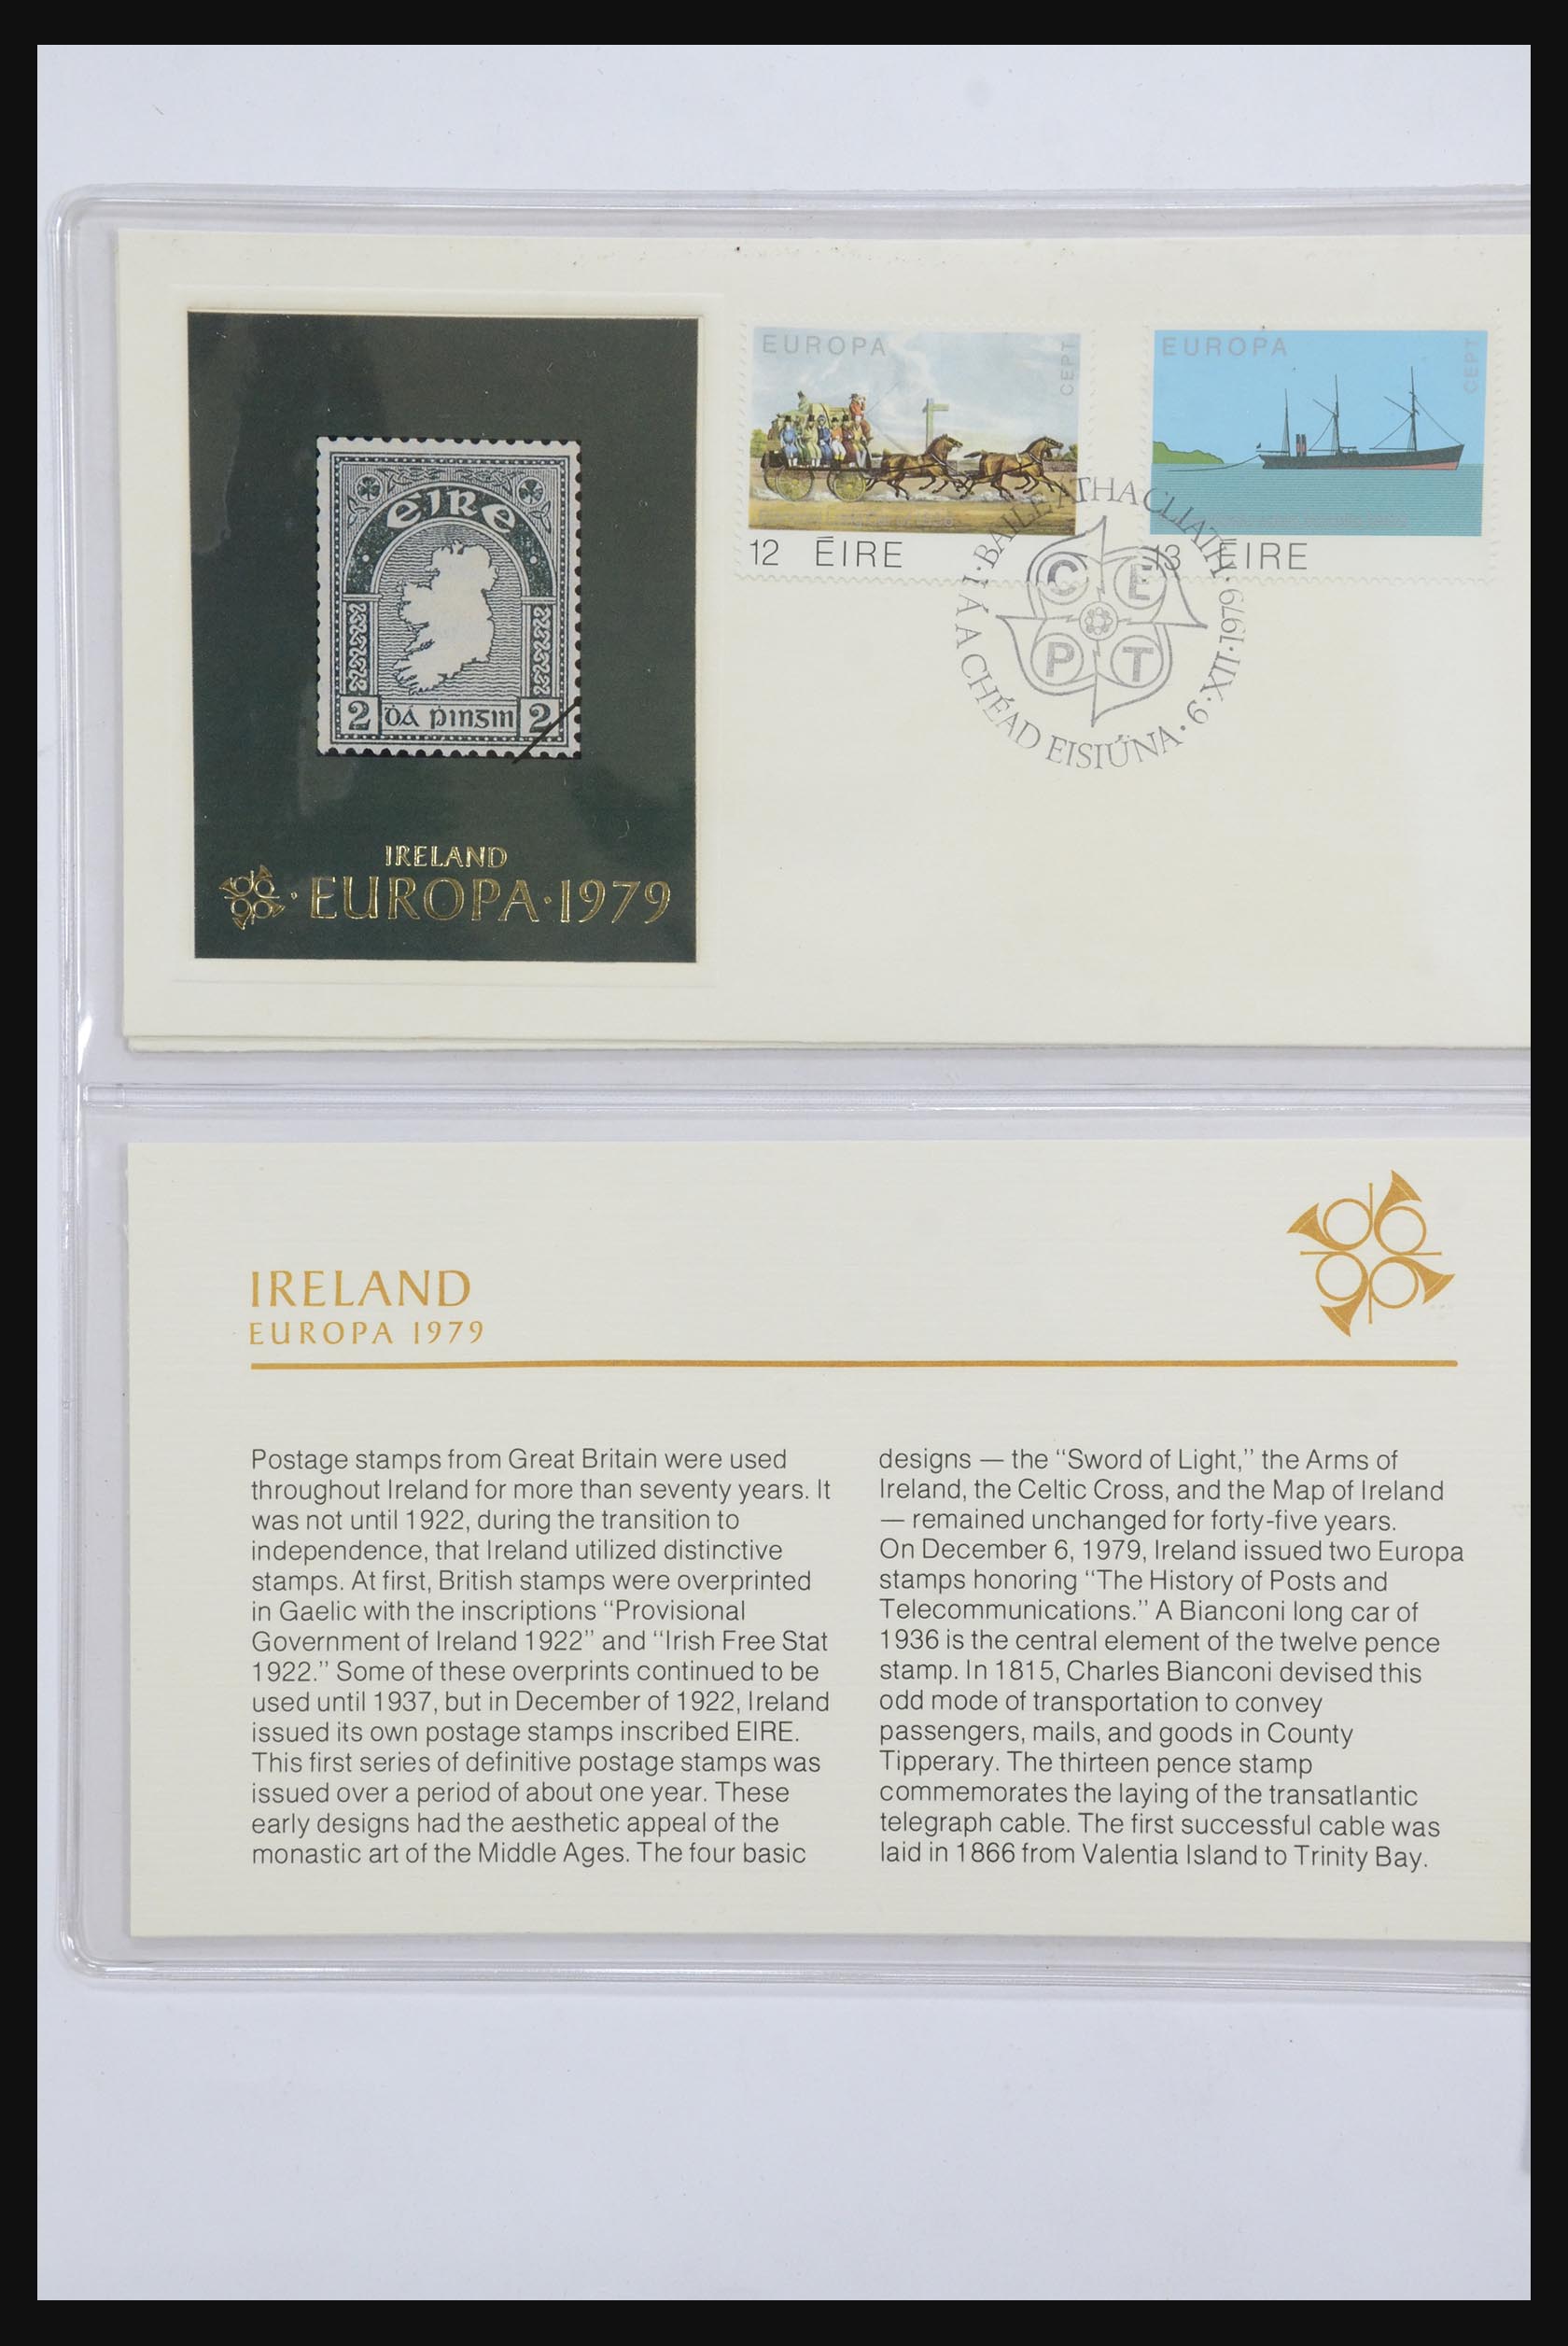 31613 0026 - 31613 Wereld brieven/fdc's 1920-1980.